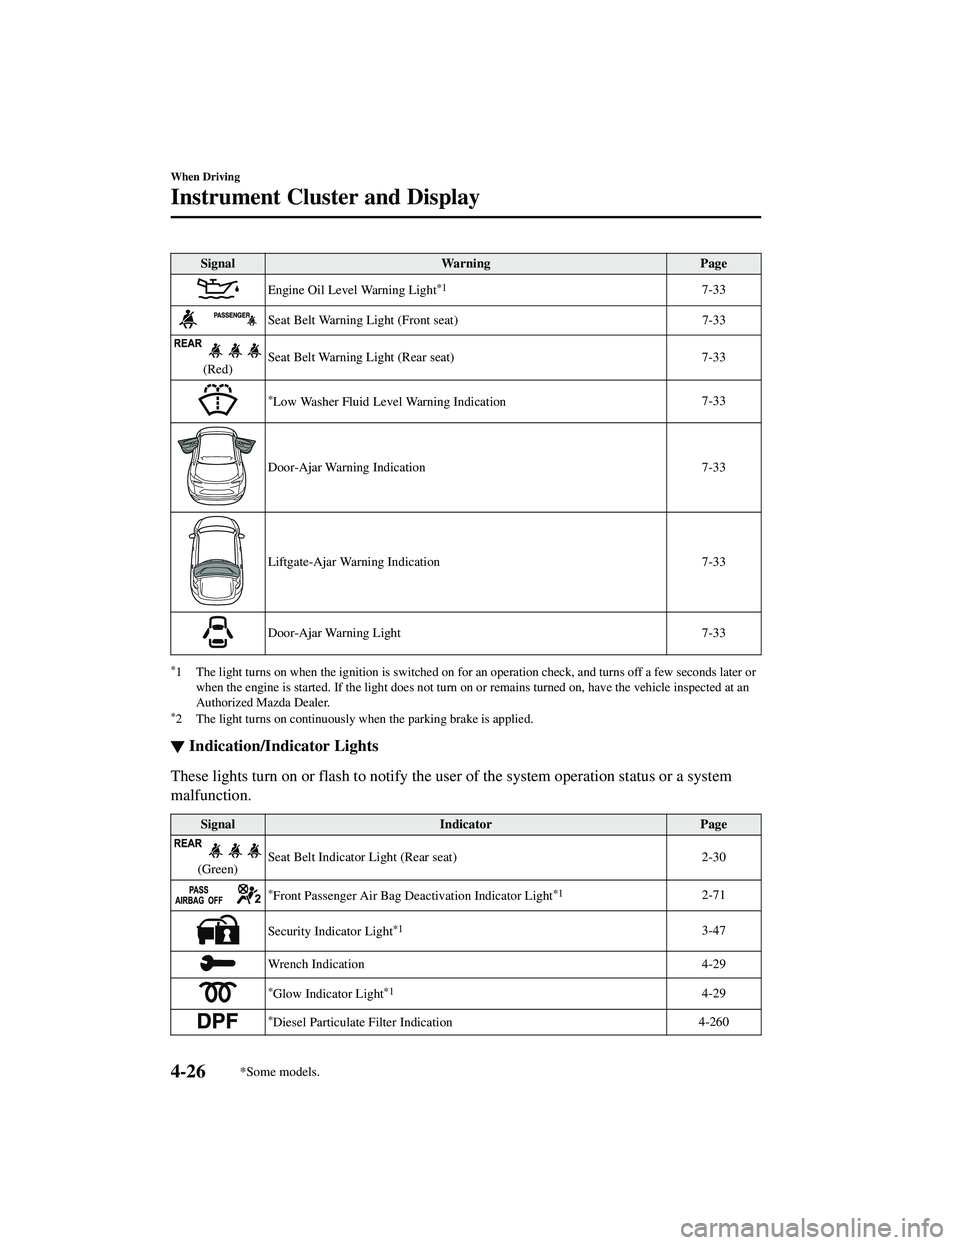 MAZDA MODEL CX-5 2021  Owners Manual SignalWarning Page
Engine Oil Level Warning Light*17-33
Seat Belt Warning Light (Front seat) 7-33
(Red)Seat Belt Warning Light (Rear seat) 7-33
*Low Washer Fluid Level Warning Indication
7-33
Door-Aja